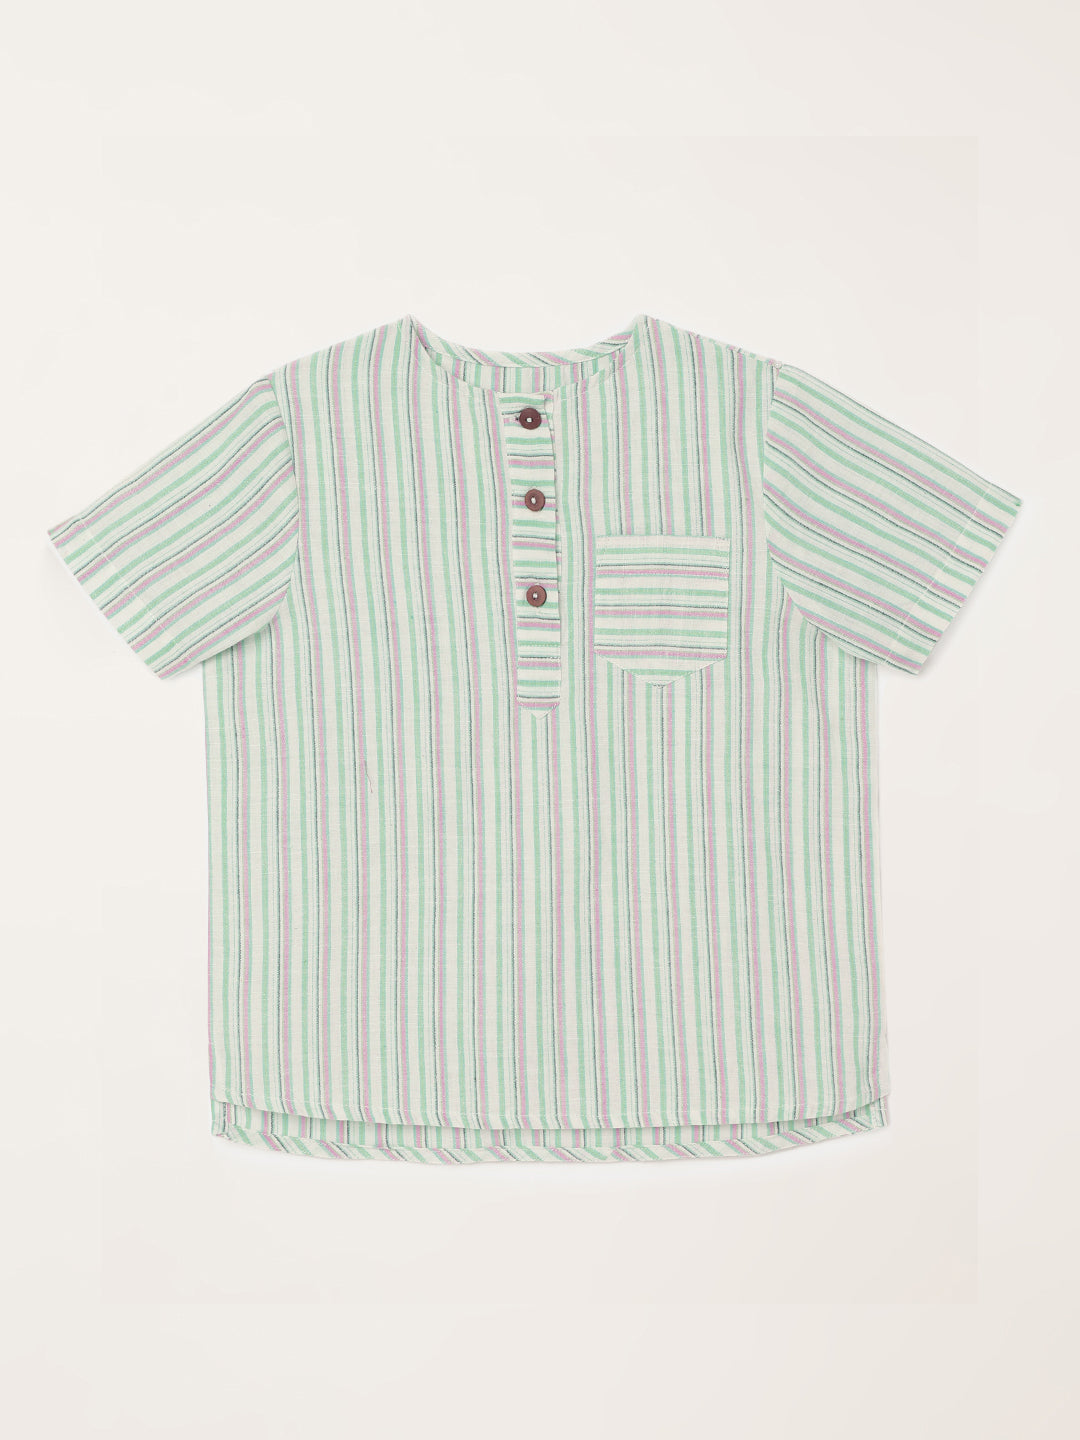 Boys Handloom Cotton Green Stripes Half Sleeves Shirt 1 yr to 8 yrs - Front